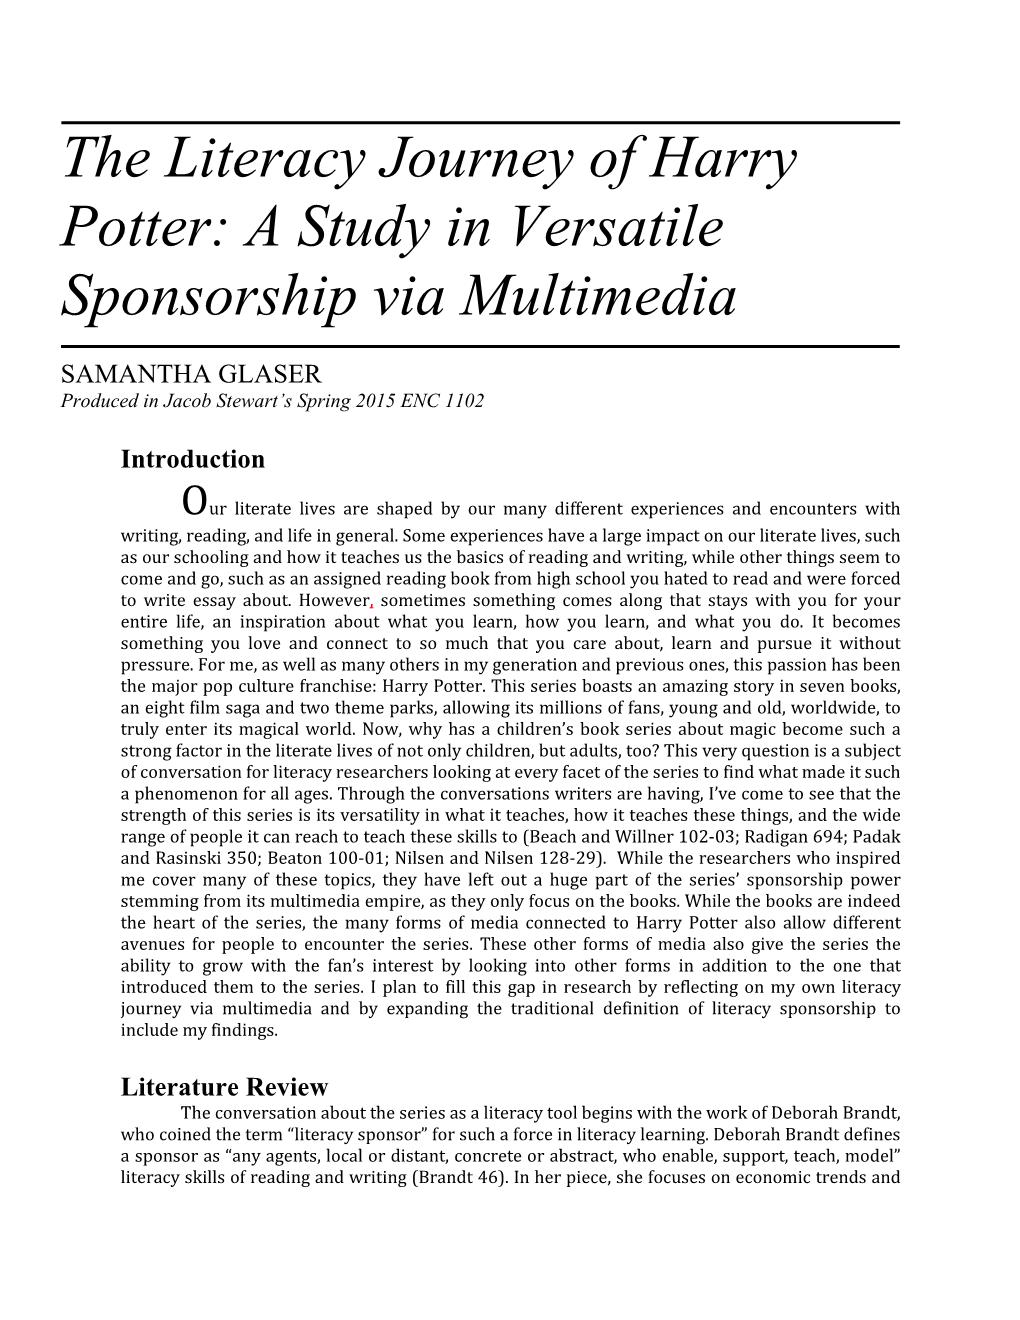 The Literacy Journey of Harry Potter: a Study in Versatile Sponsorship Via Multimedia